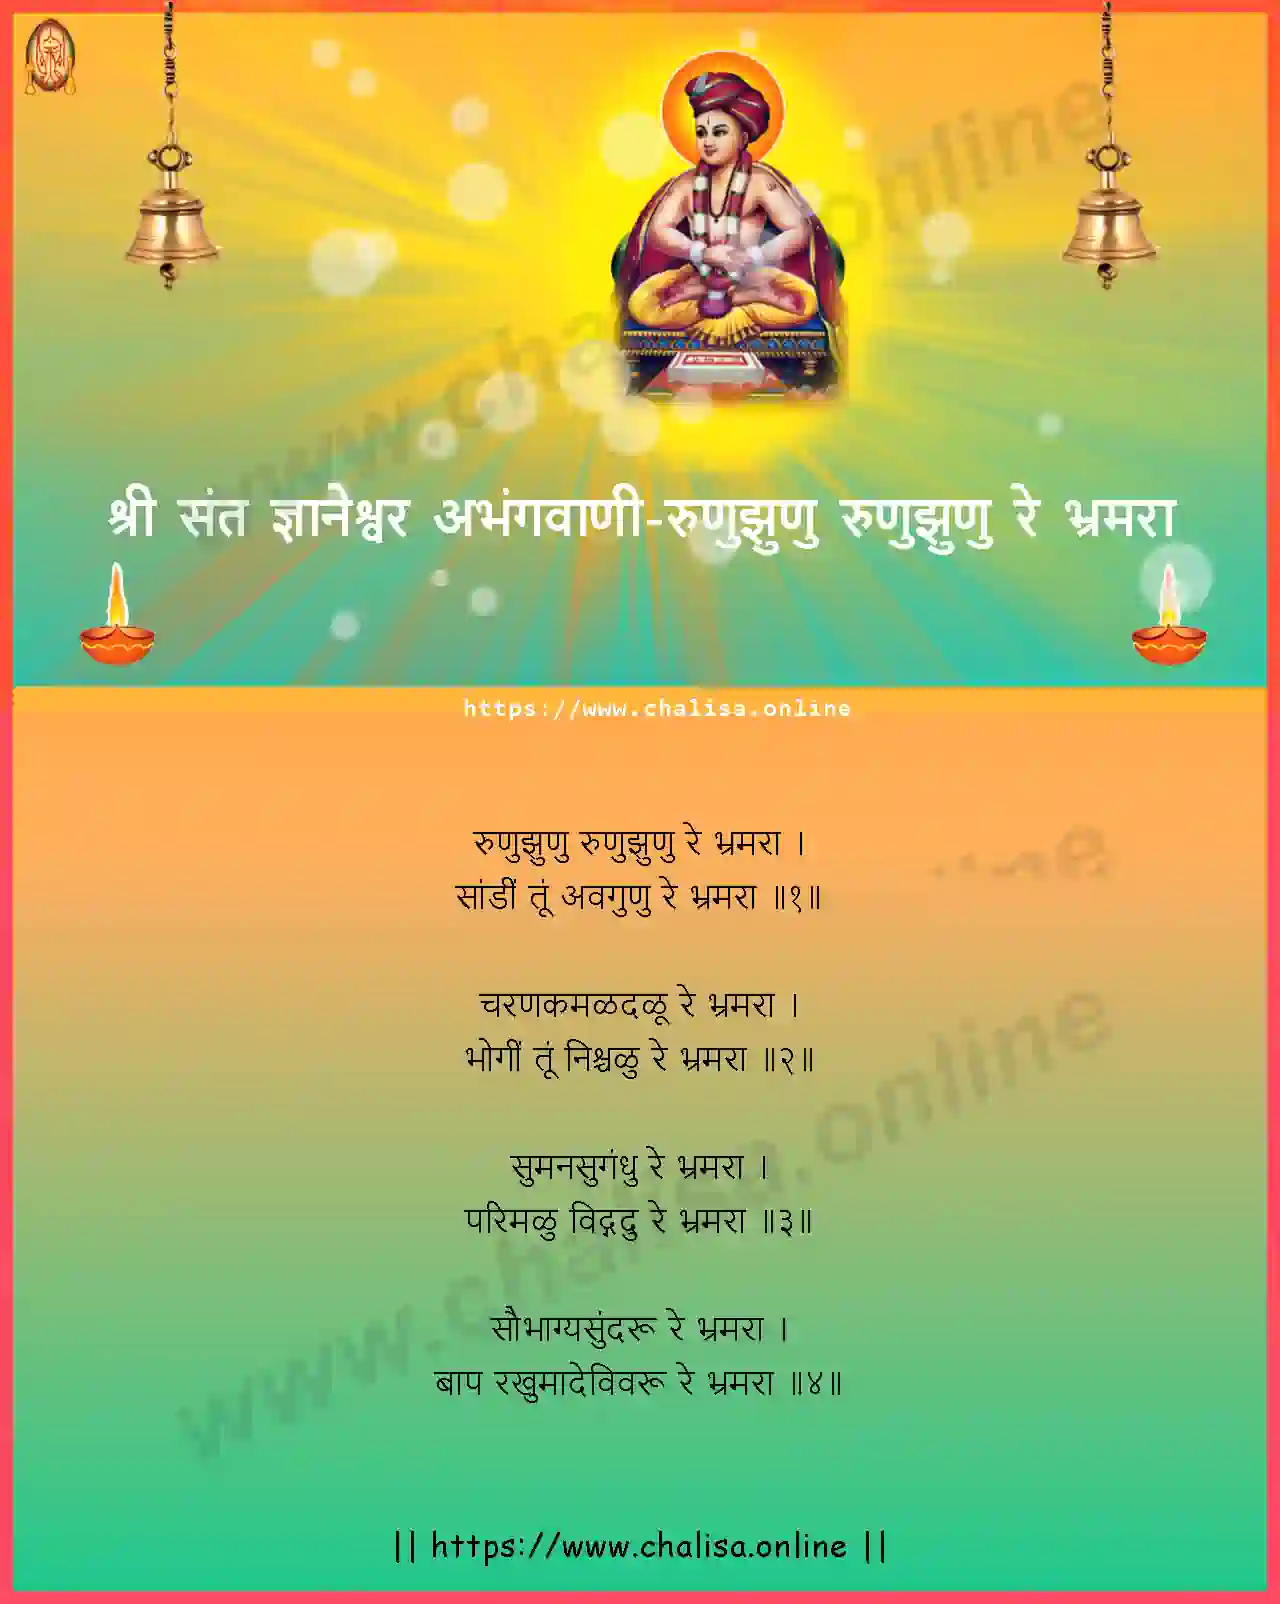 runujhunu-runujhunu-re-shri-sant-dnyaneshwar-abhang-marathi-lyrics-download